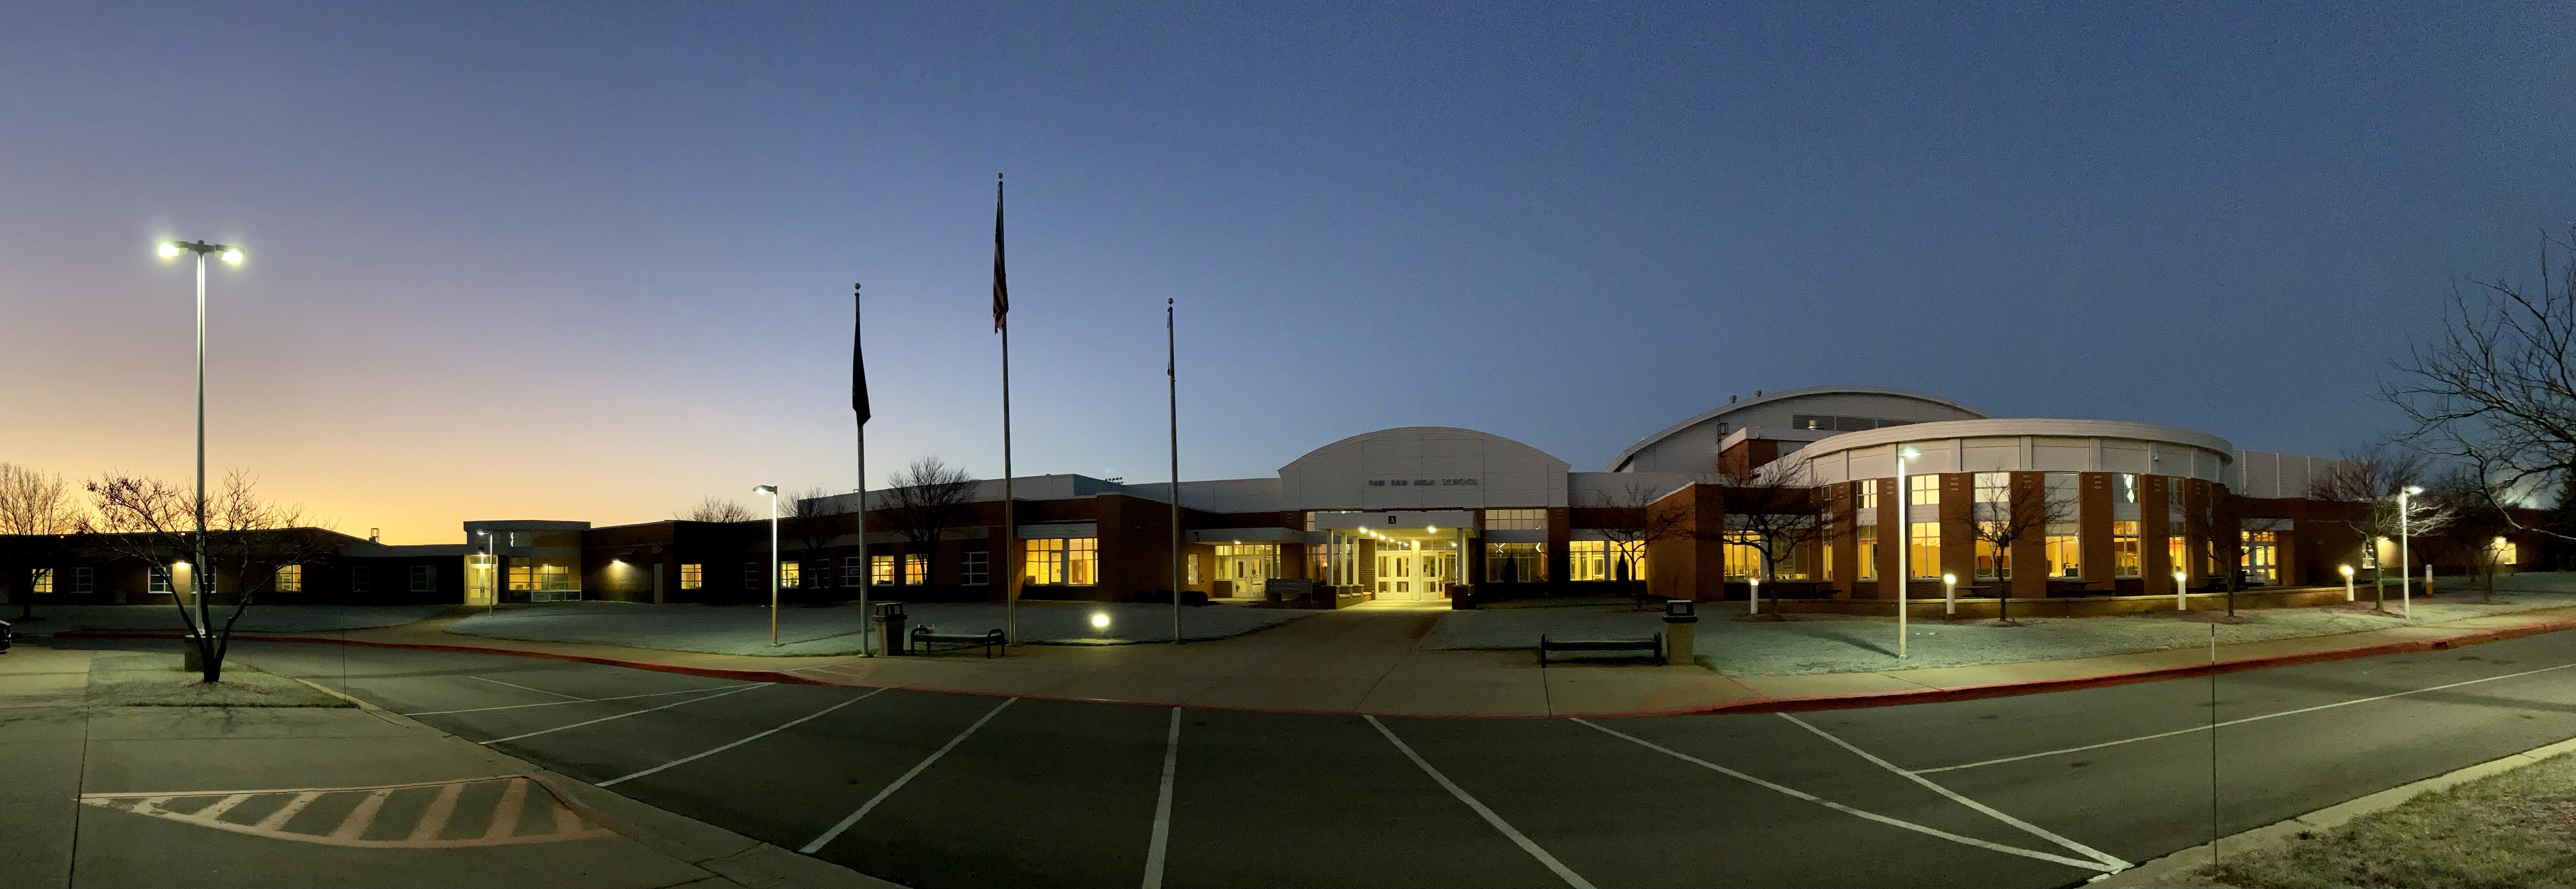 Paw Paw High School in twilight